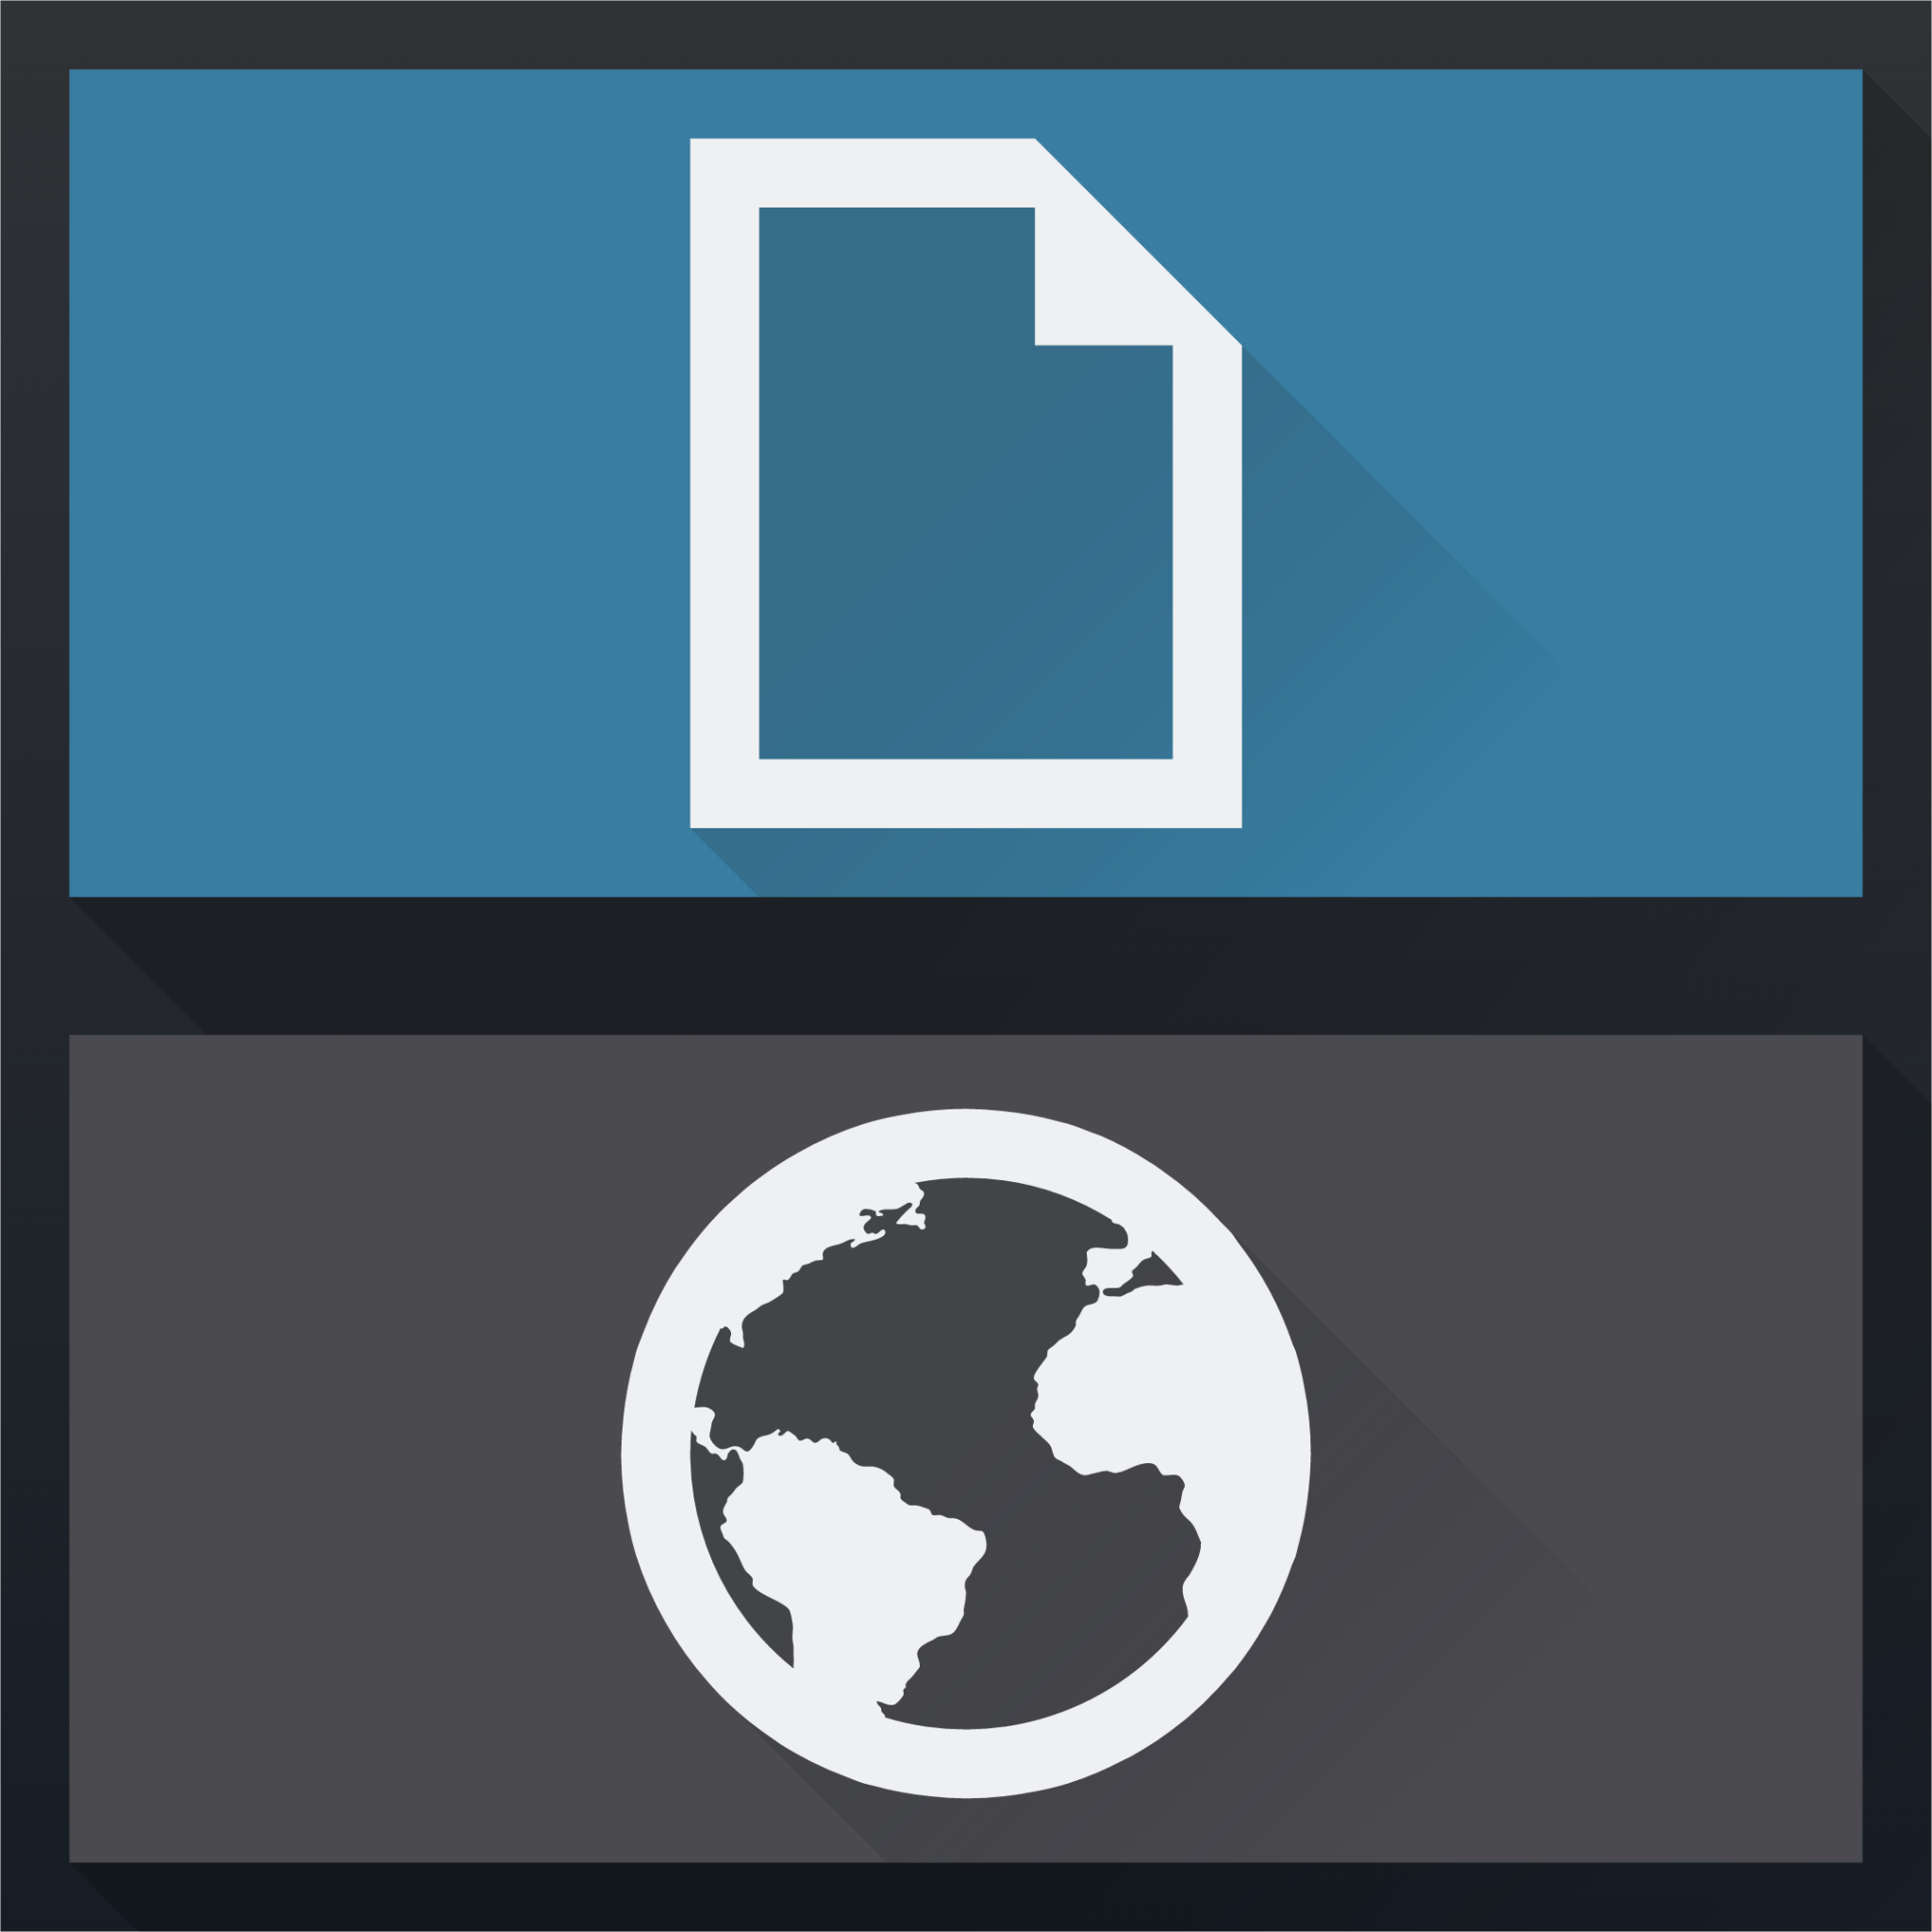 preferences desktop activities icon